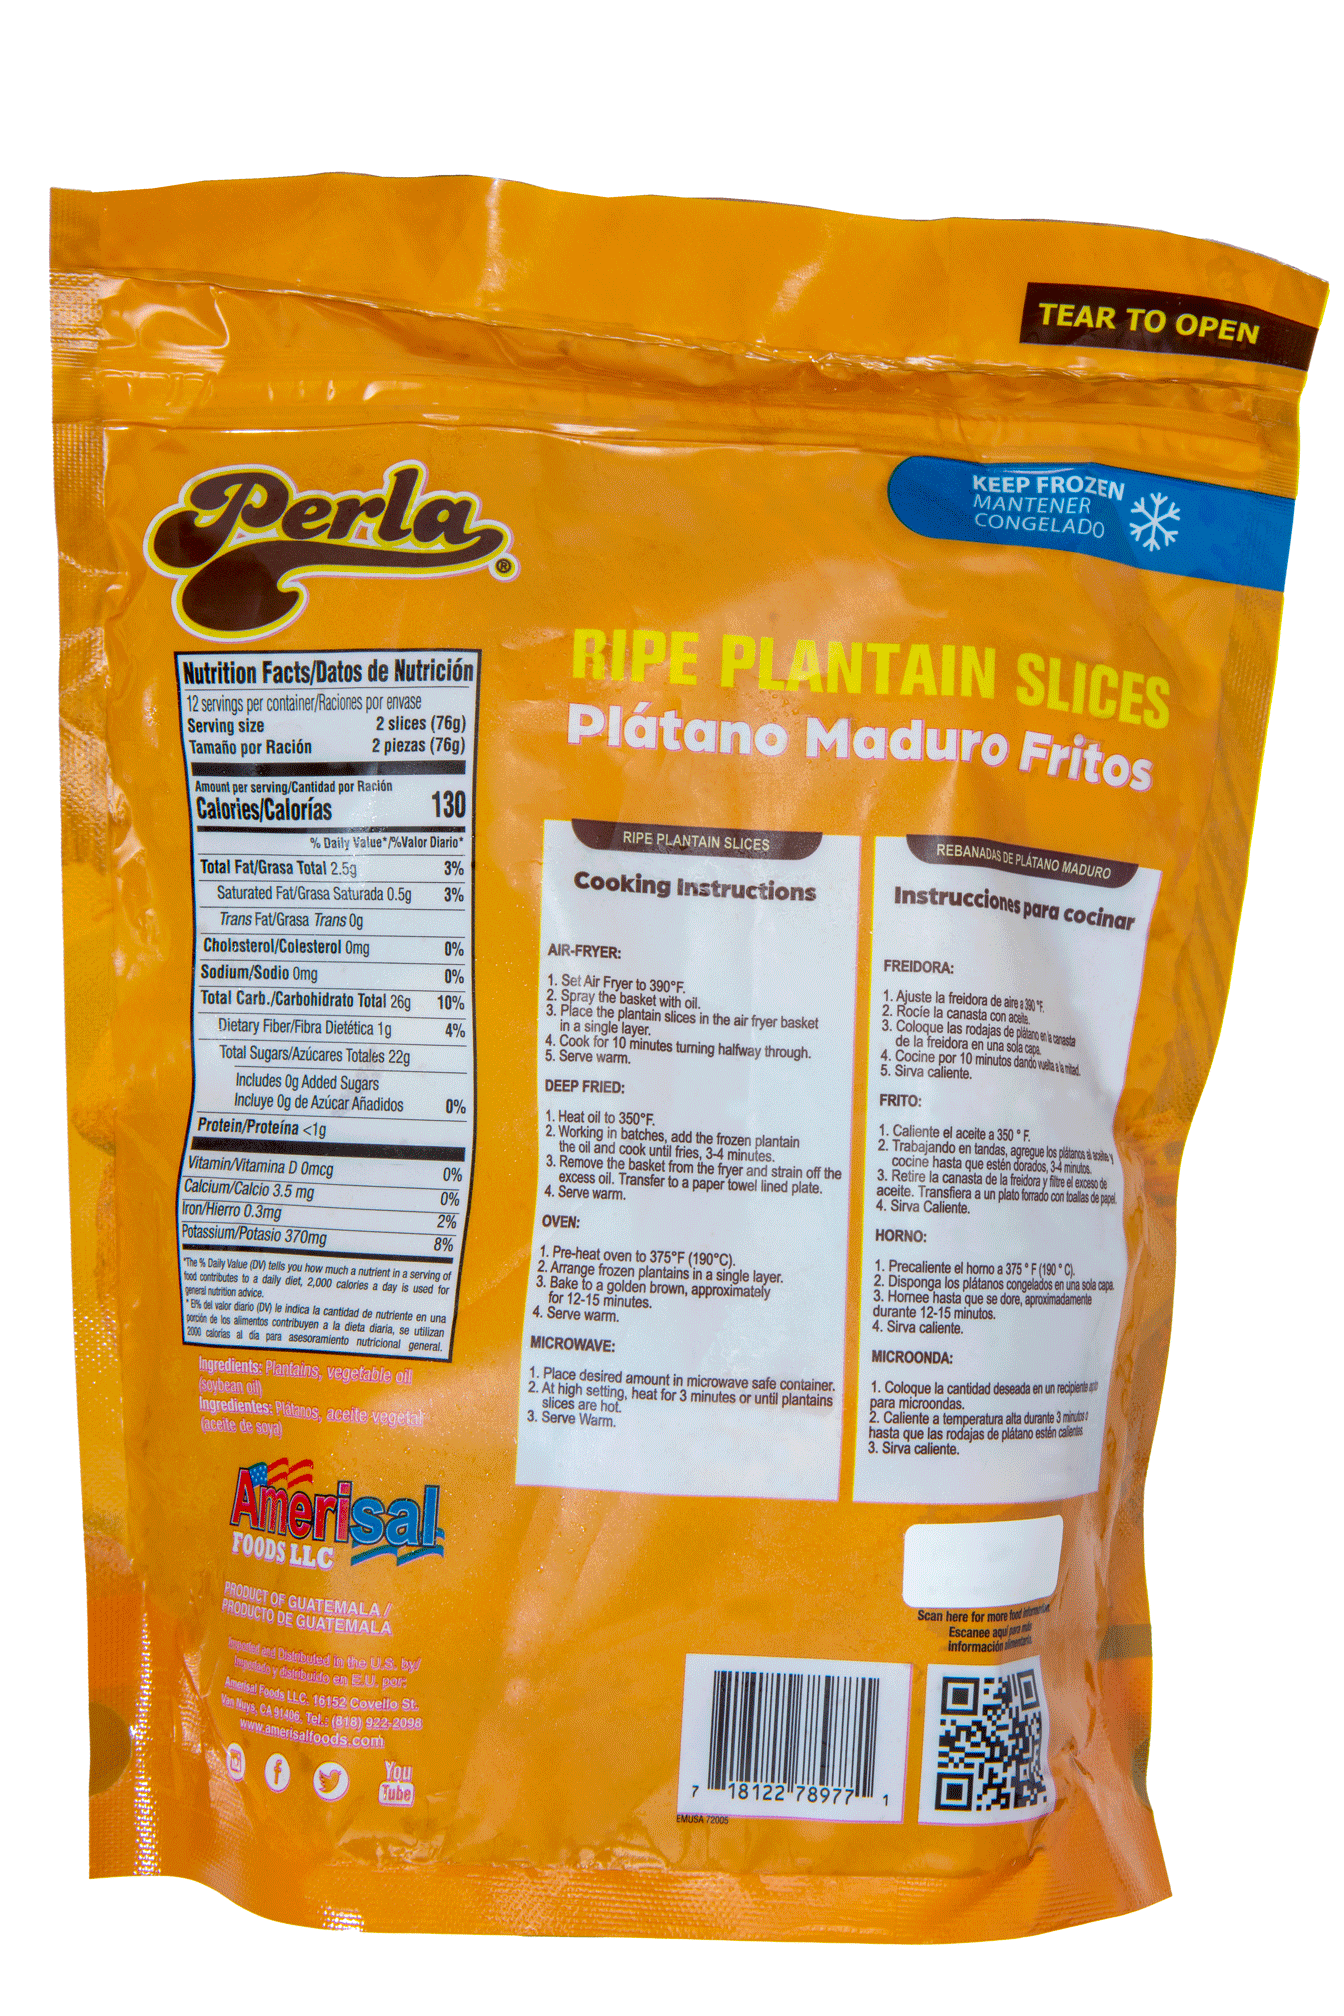 Perla Ripe Plantain Slices (P{lantano Maduro Fritos) 2 pounds